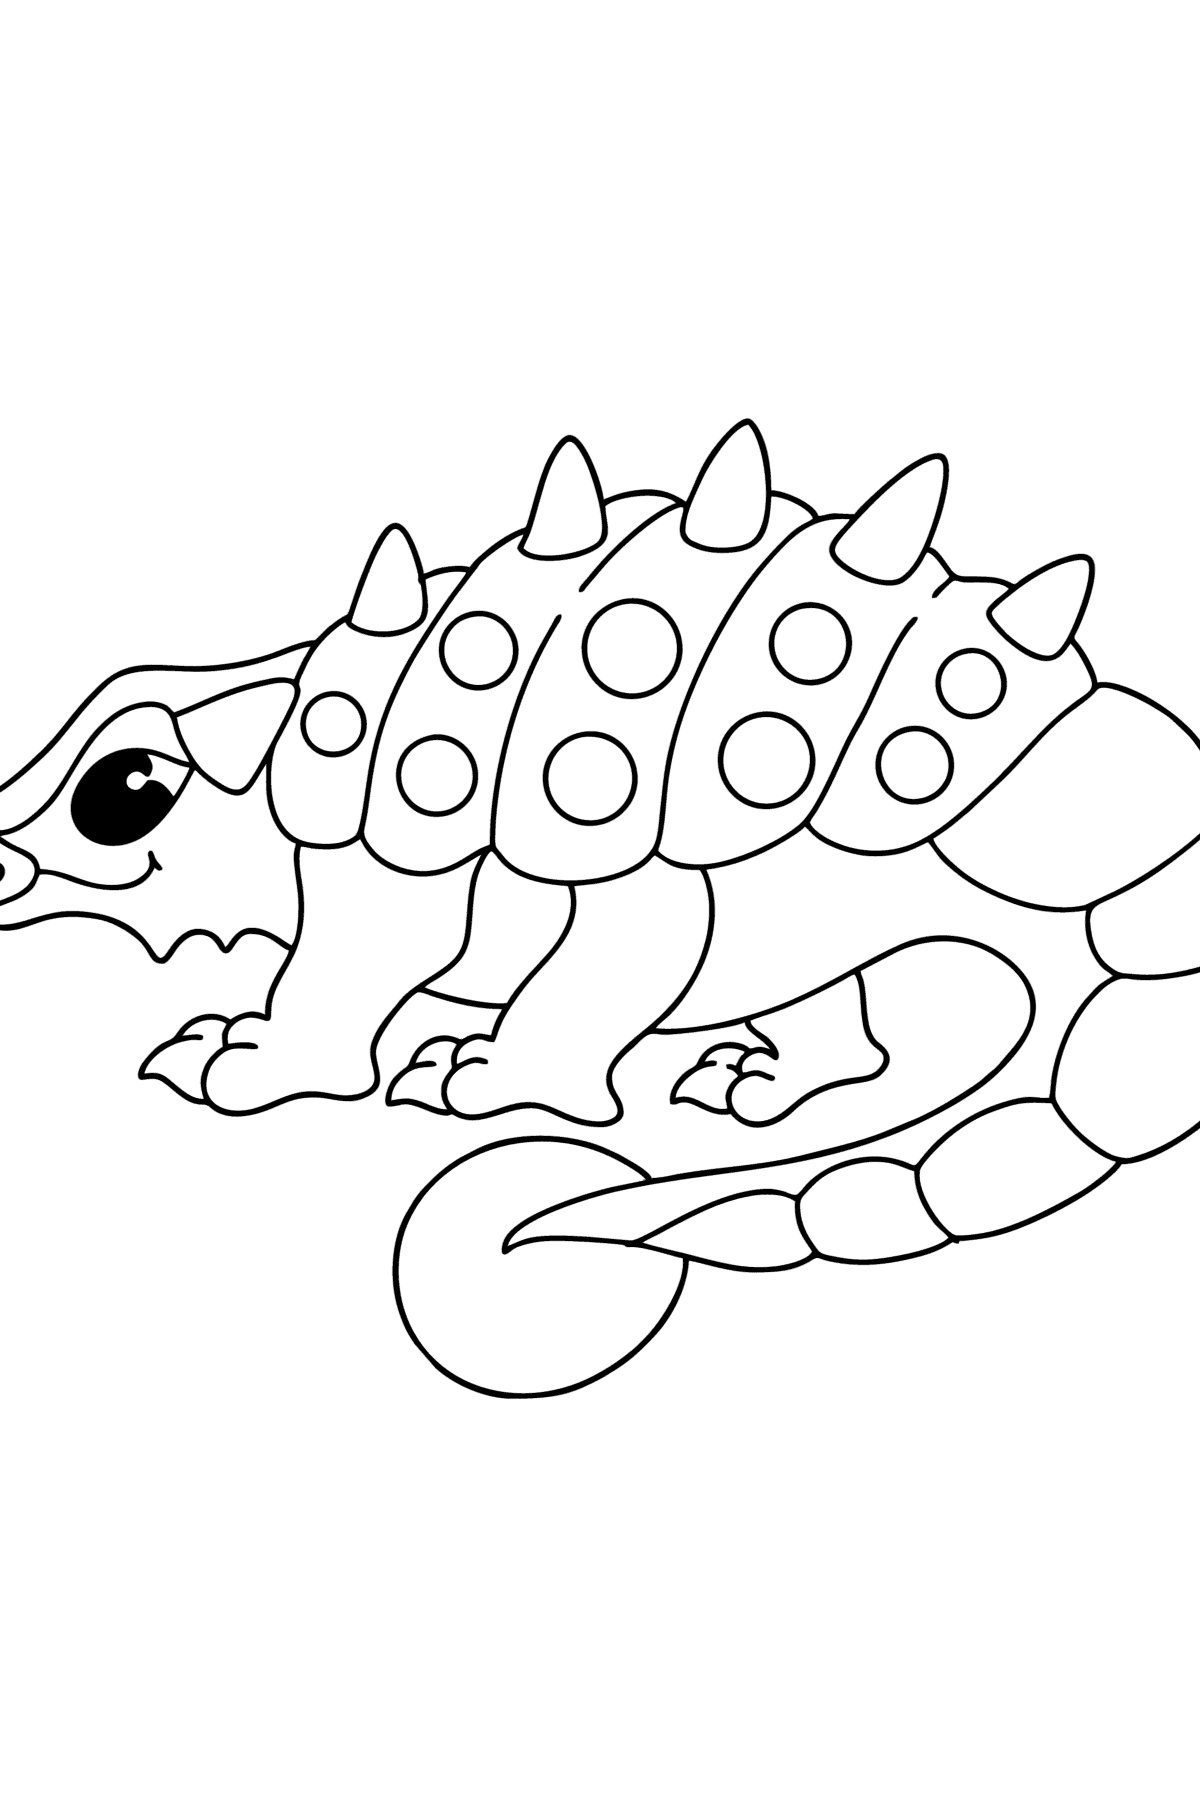 Розмальовка Анкілозавр - Розмальовки для дітей